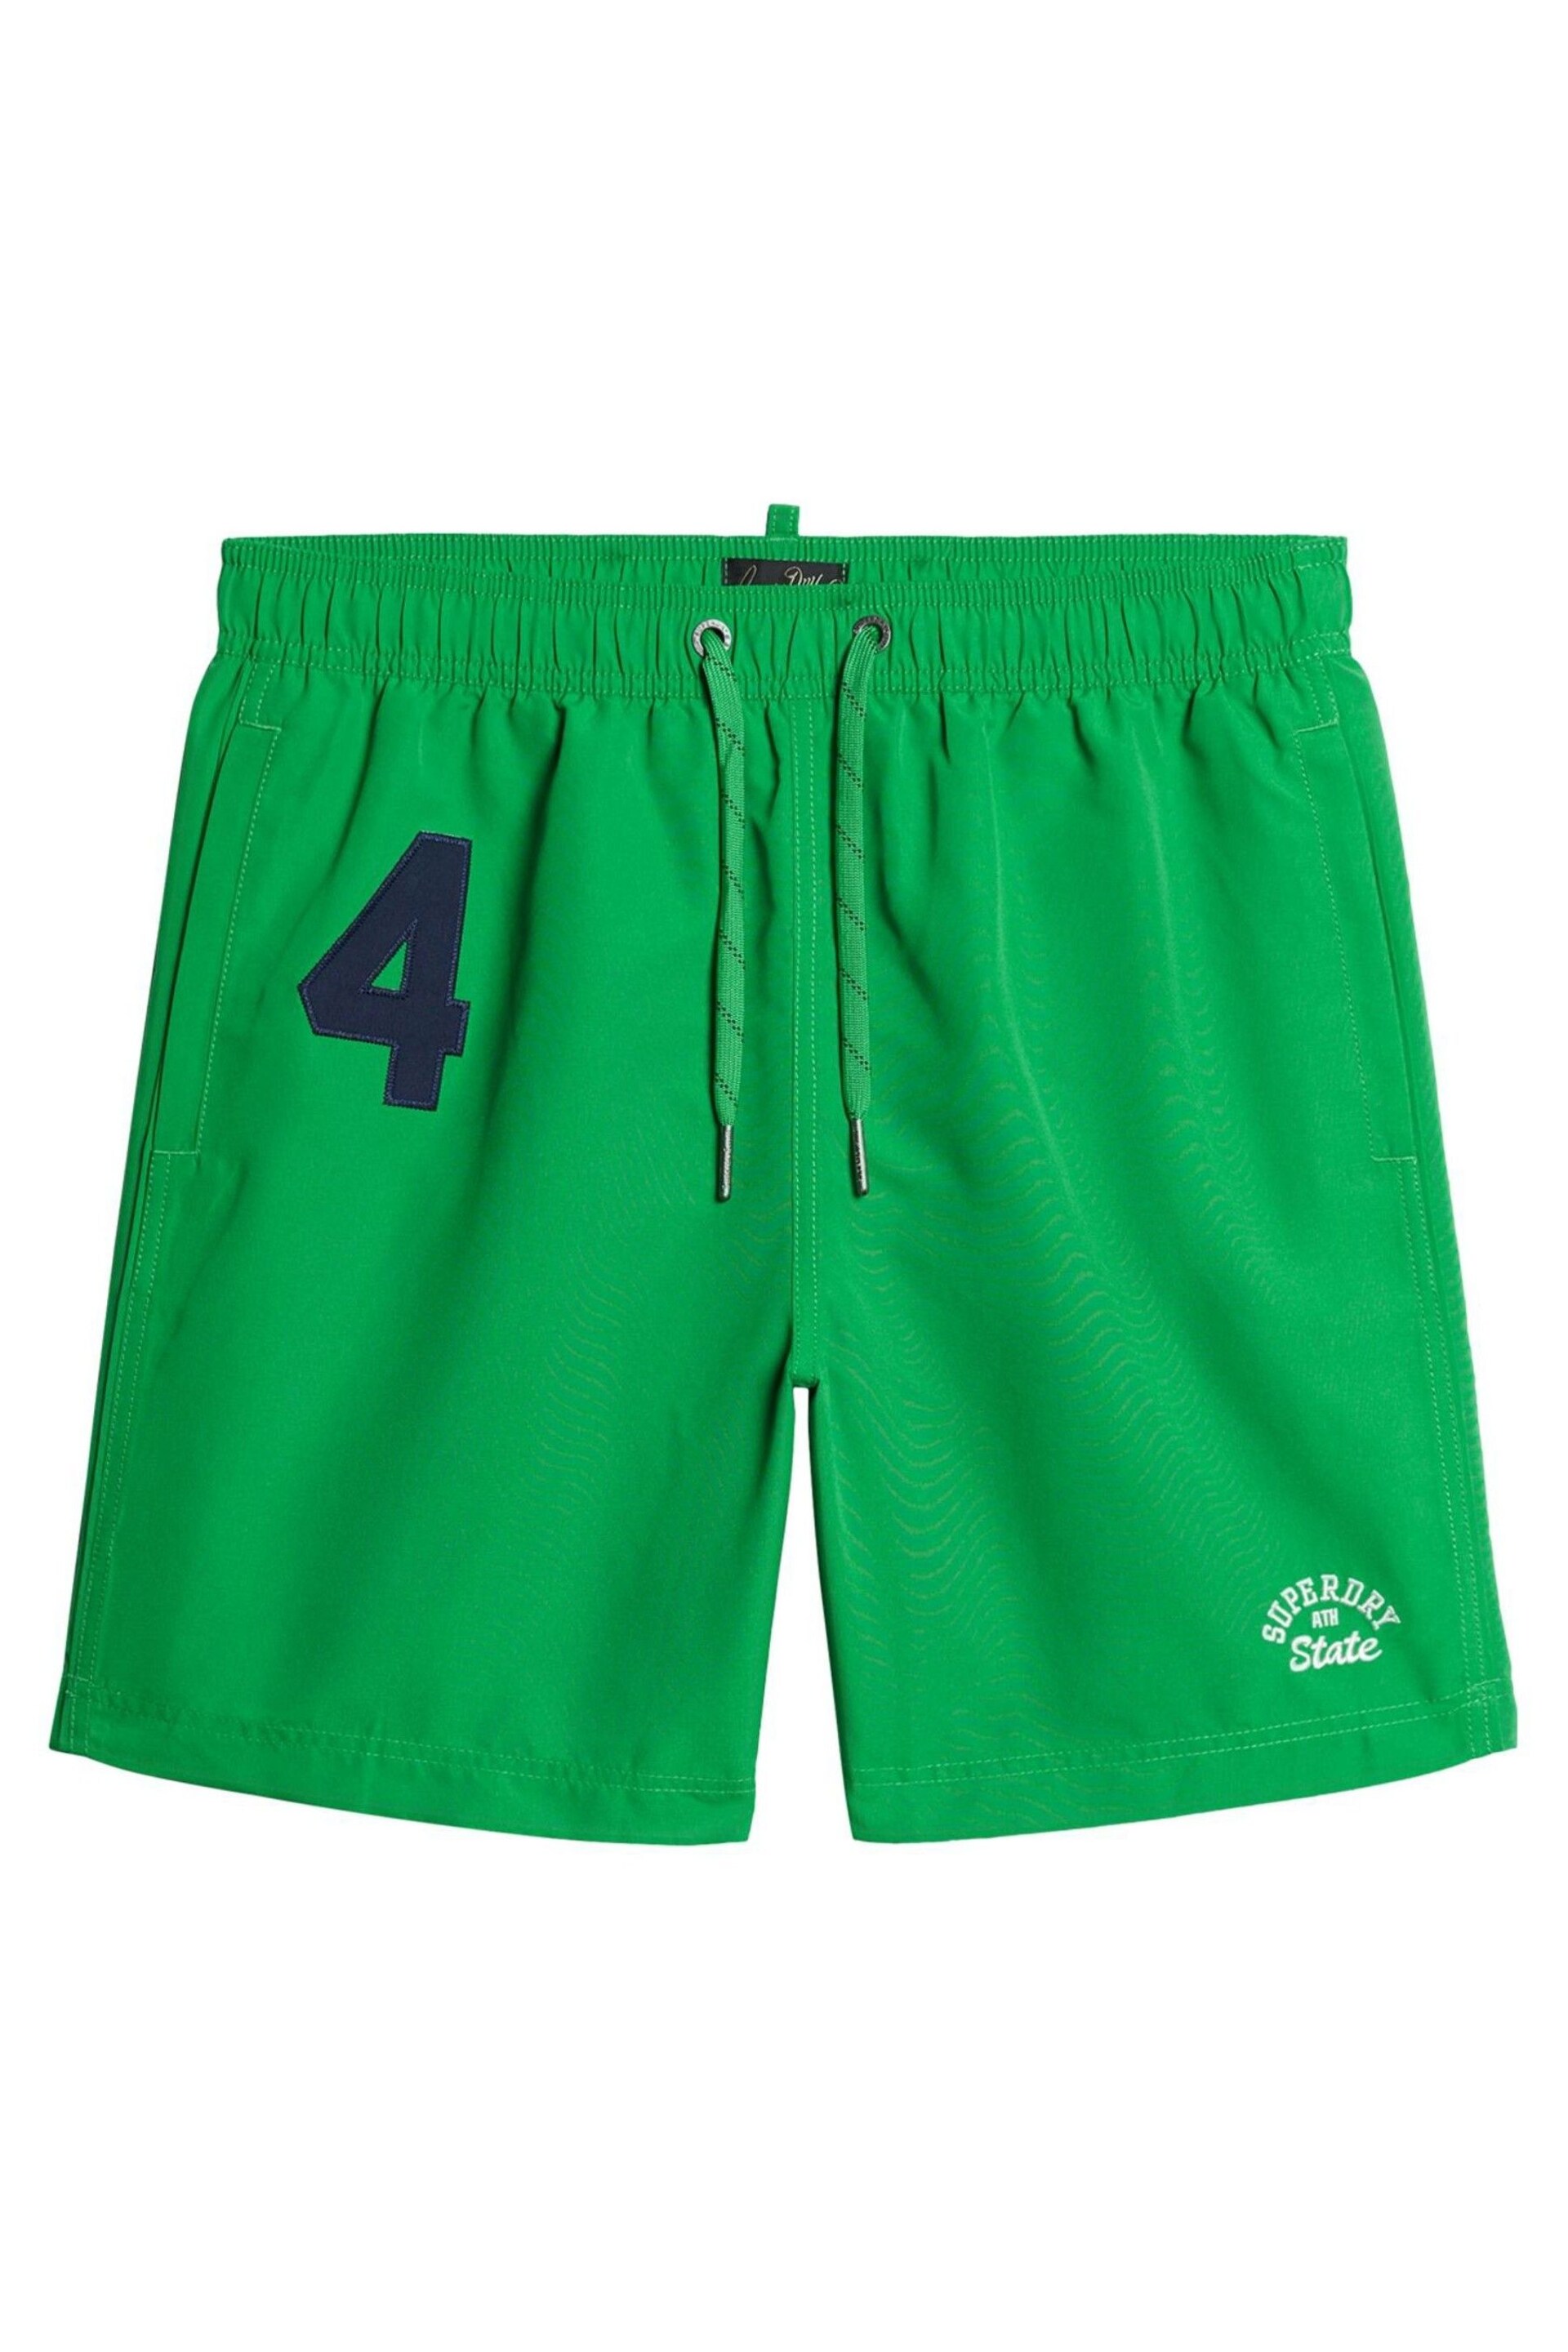 Superdry Green Vintage Polo Shirt 17" Swim Shorts - Image 5 of 7